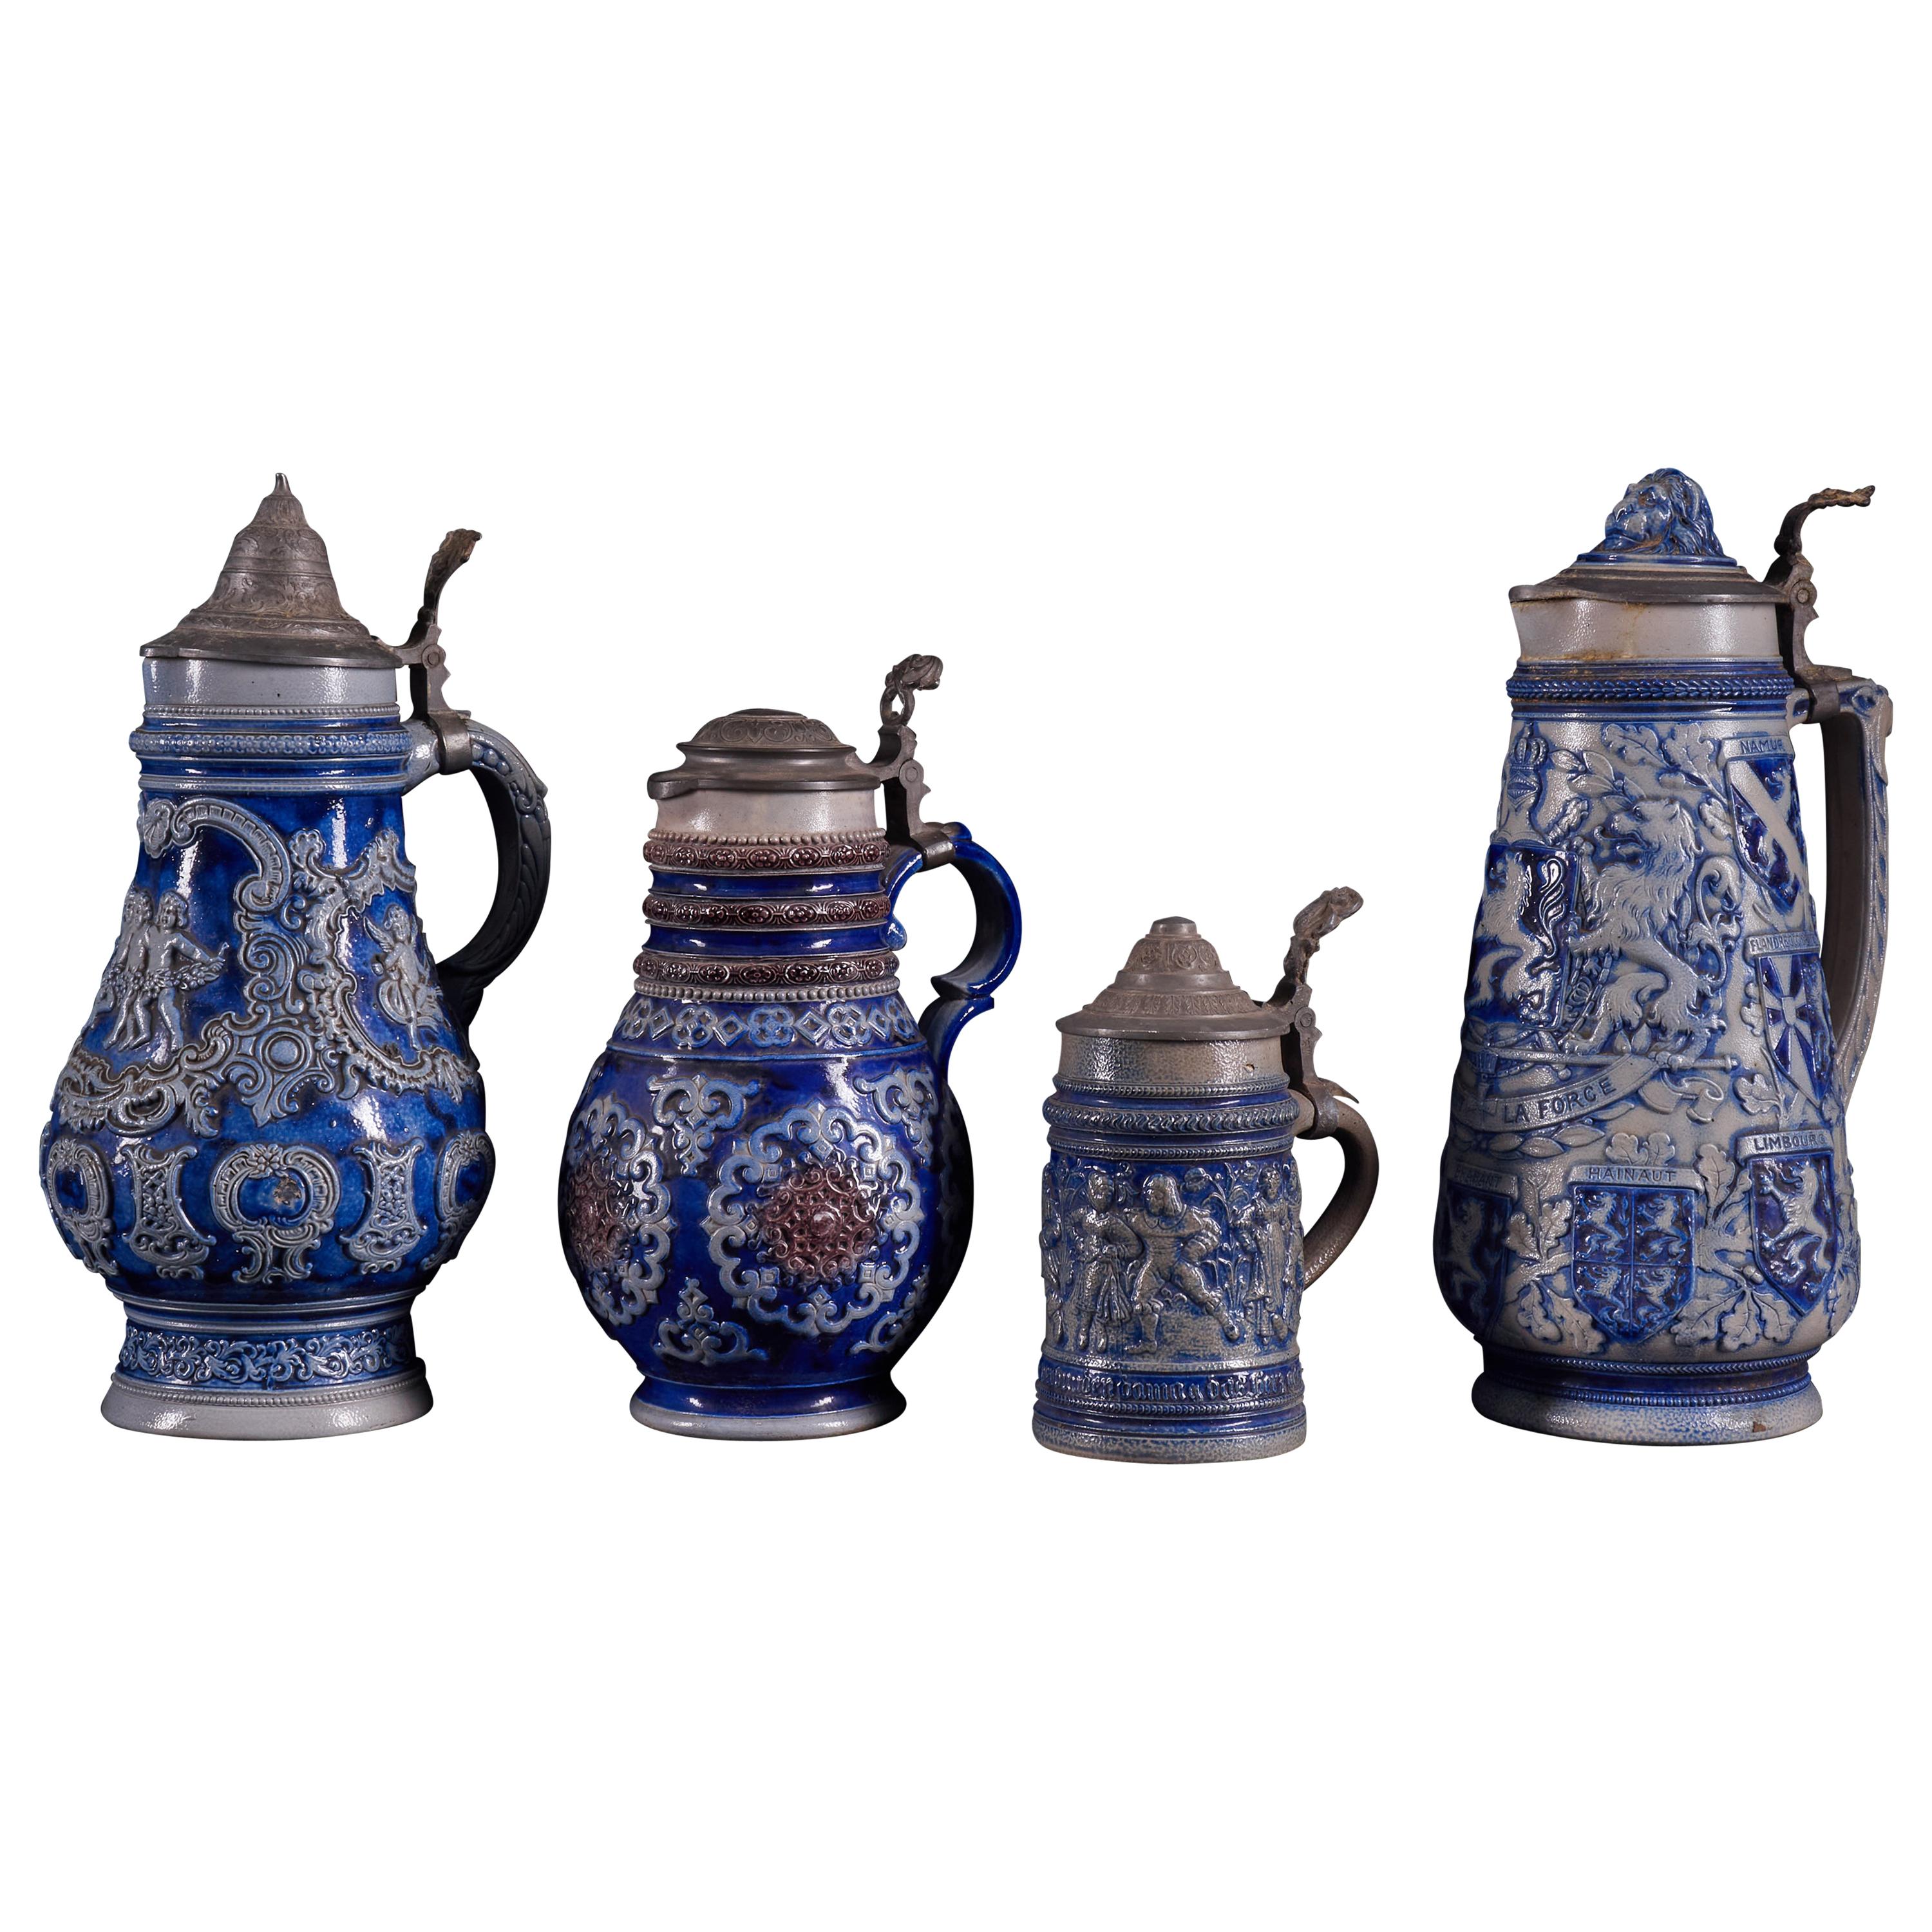 Beautiful Set of 4 Vintage Ceramic Beer Carafes with Indigo Blue Decorations